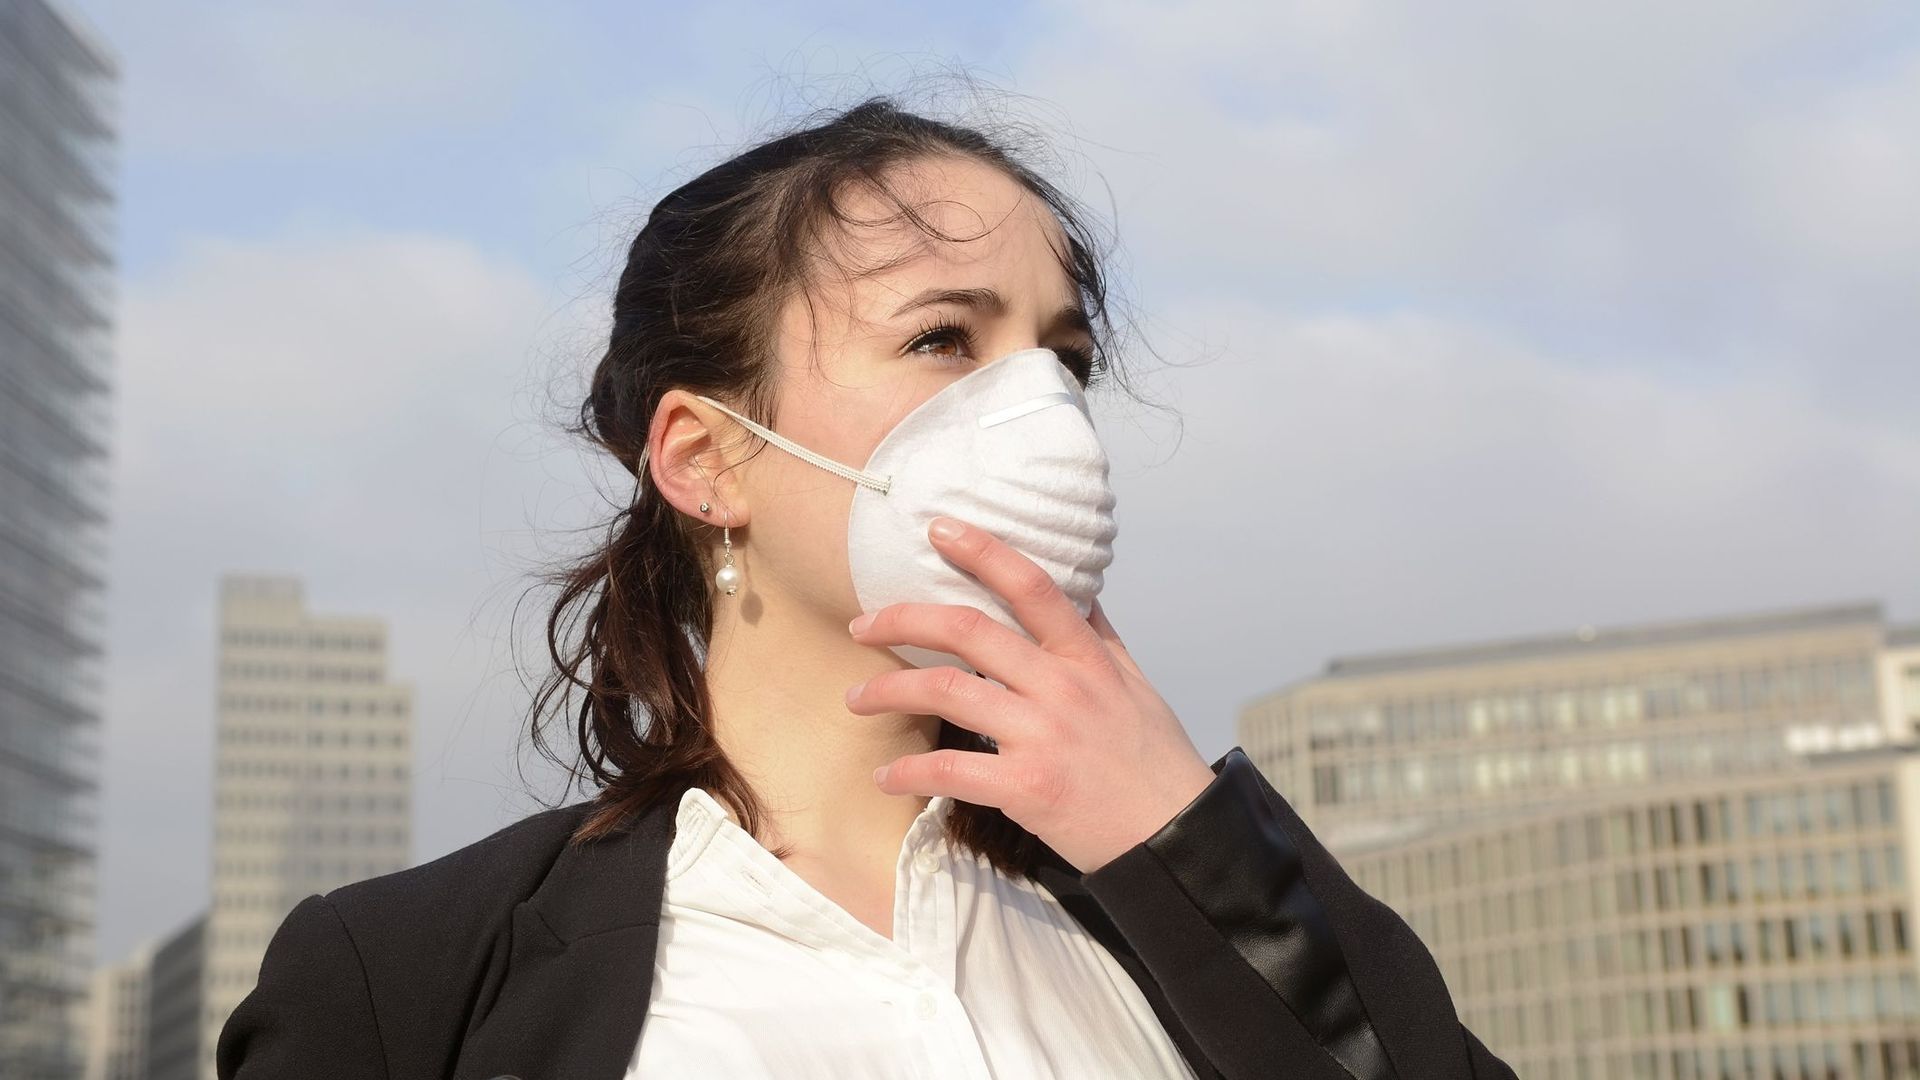 Запахло в воздухе мочой. Болезни из-за загрязнения воздуха. Влияние на человека визуального загрязнения. Загрязнение ОПС людьми.